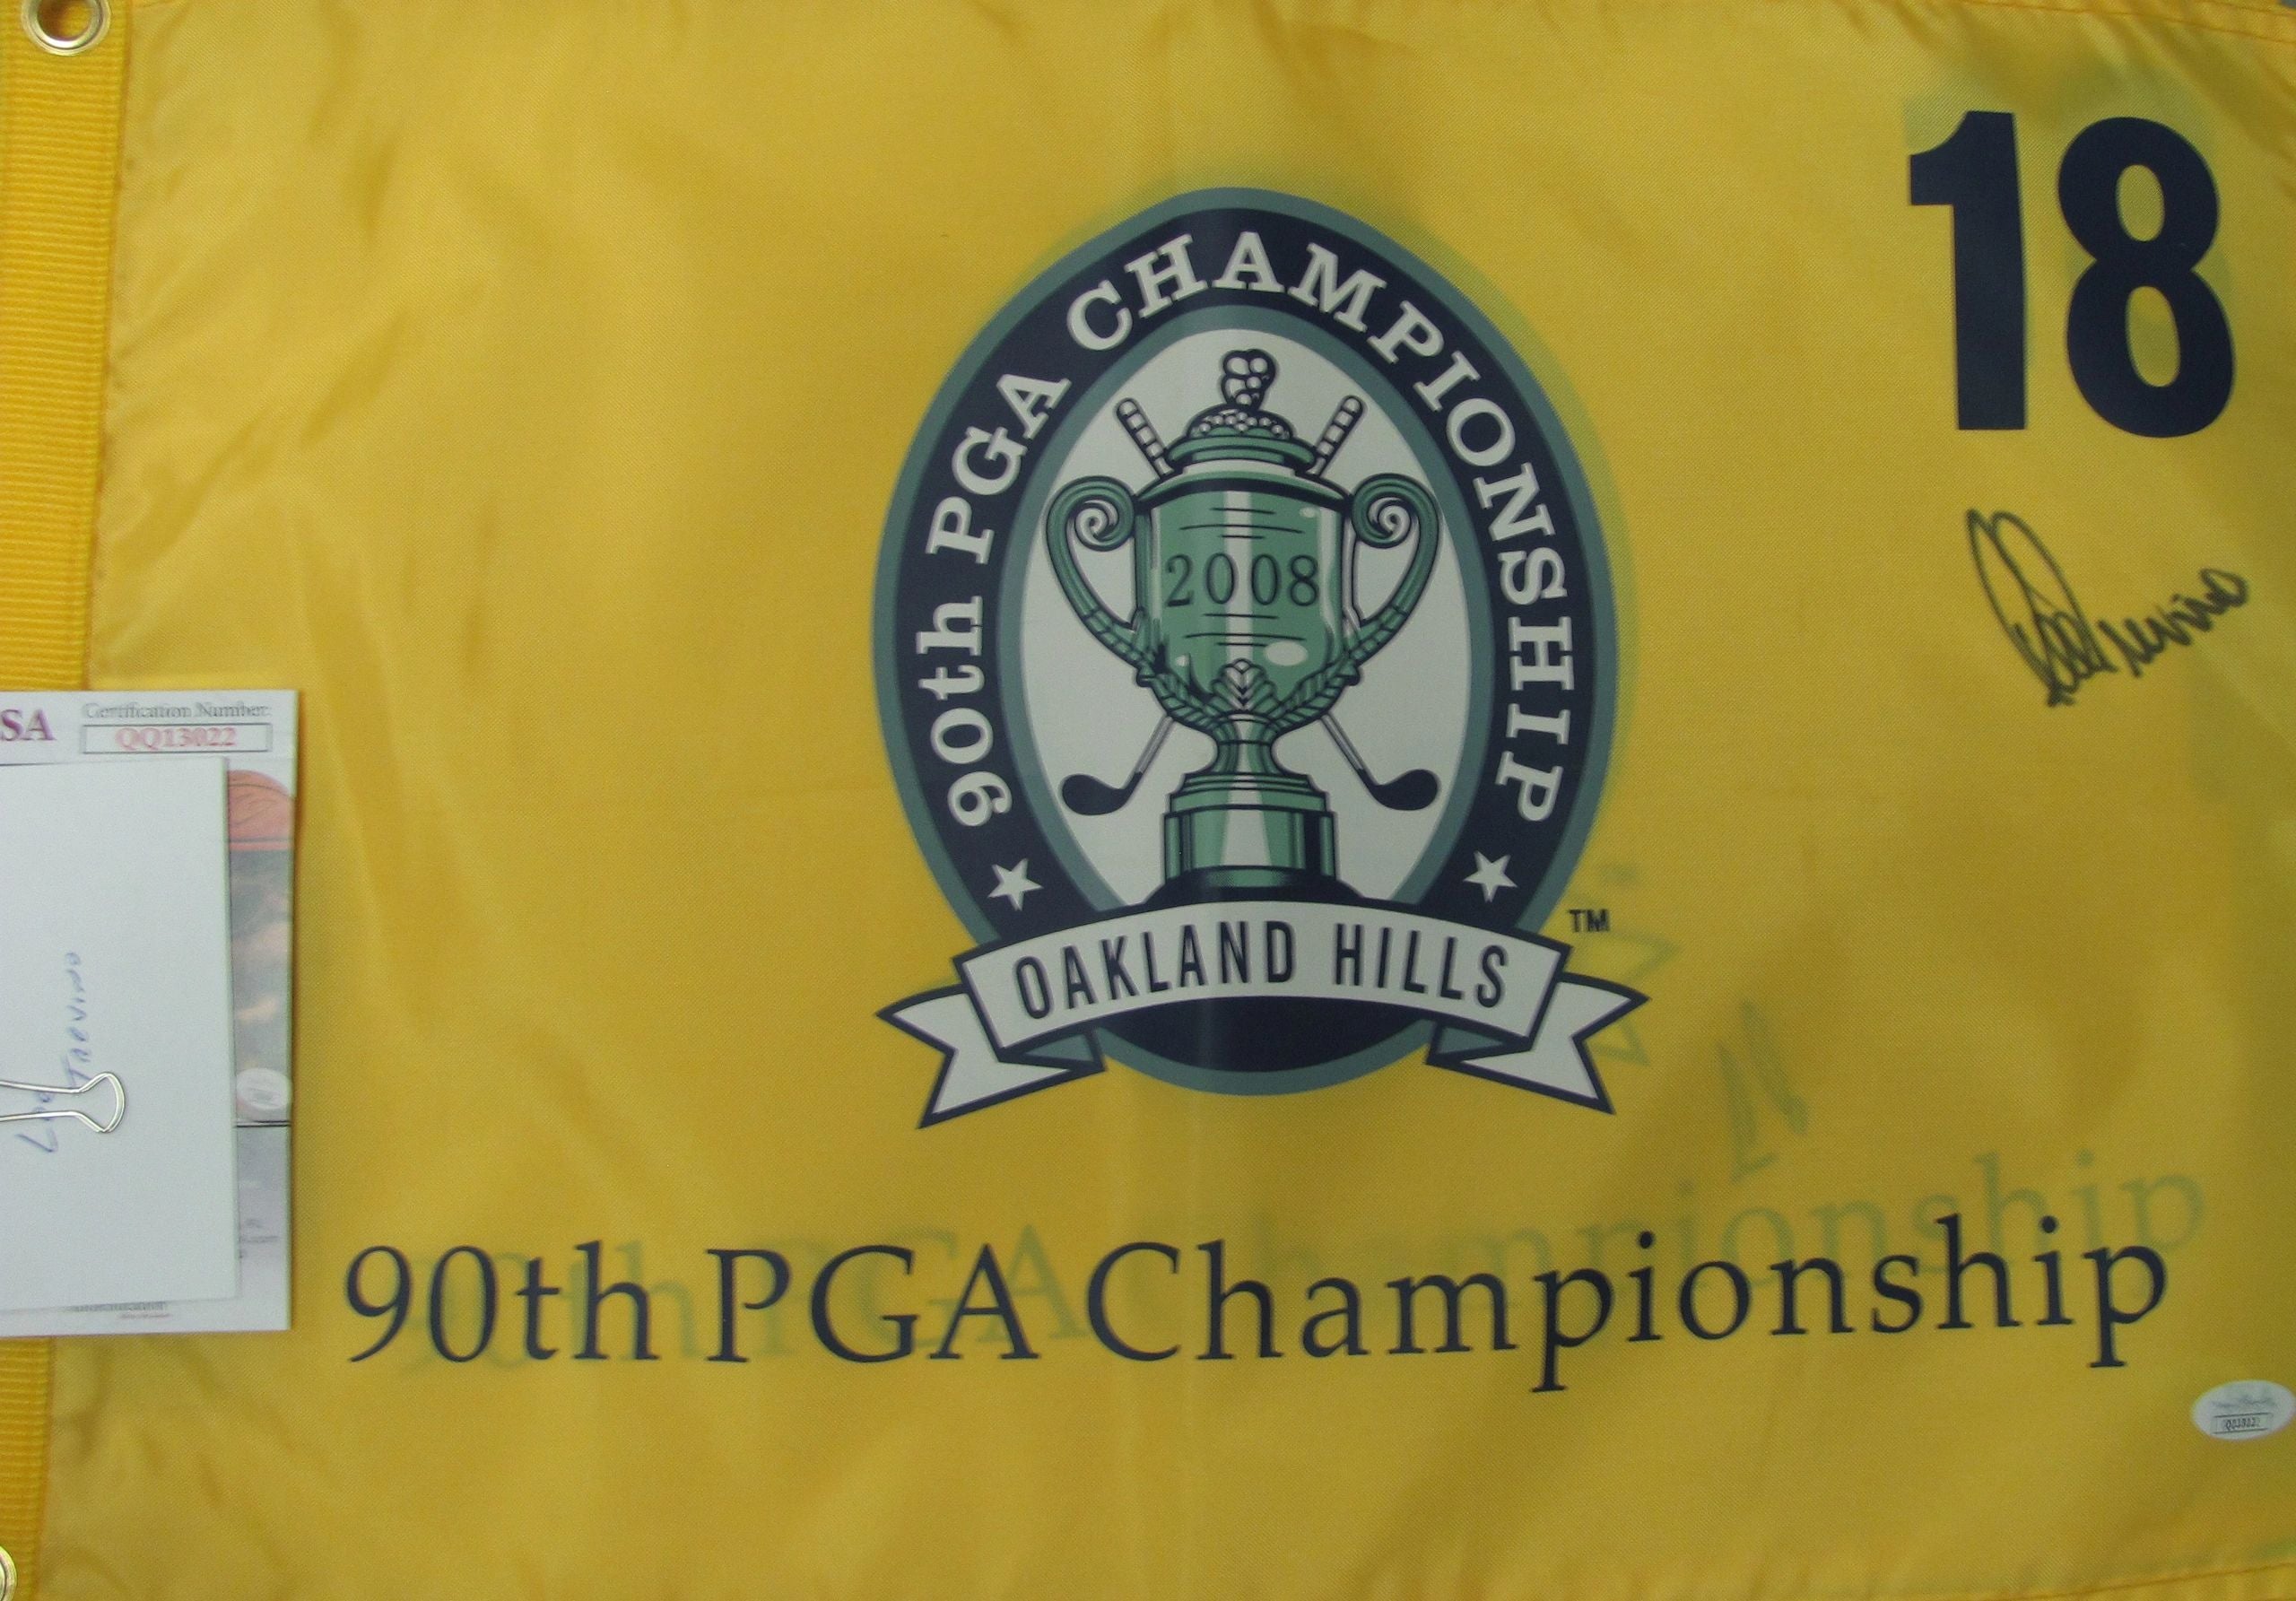 Lee Trevino Autographed 90th PGA Championship Golf Flag (2008) Oakland Hills 18th Hole - W JSA/ Coa